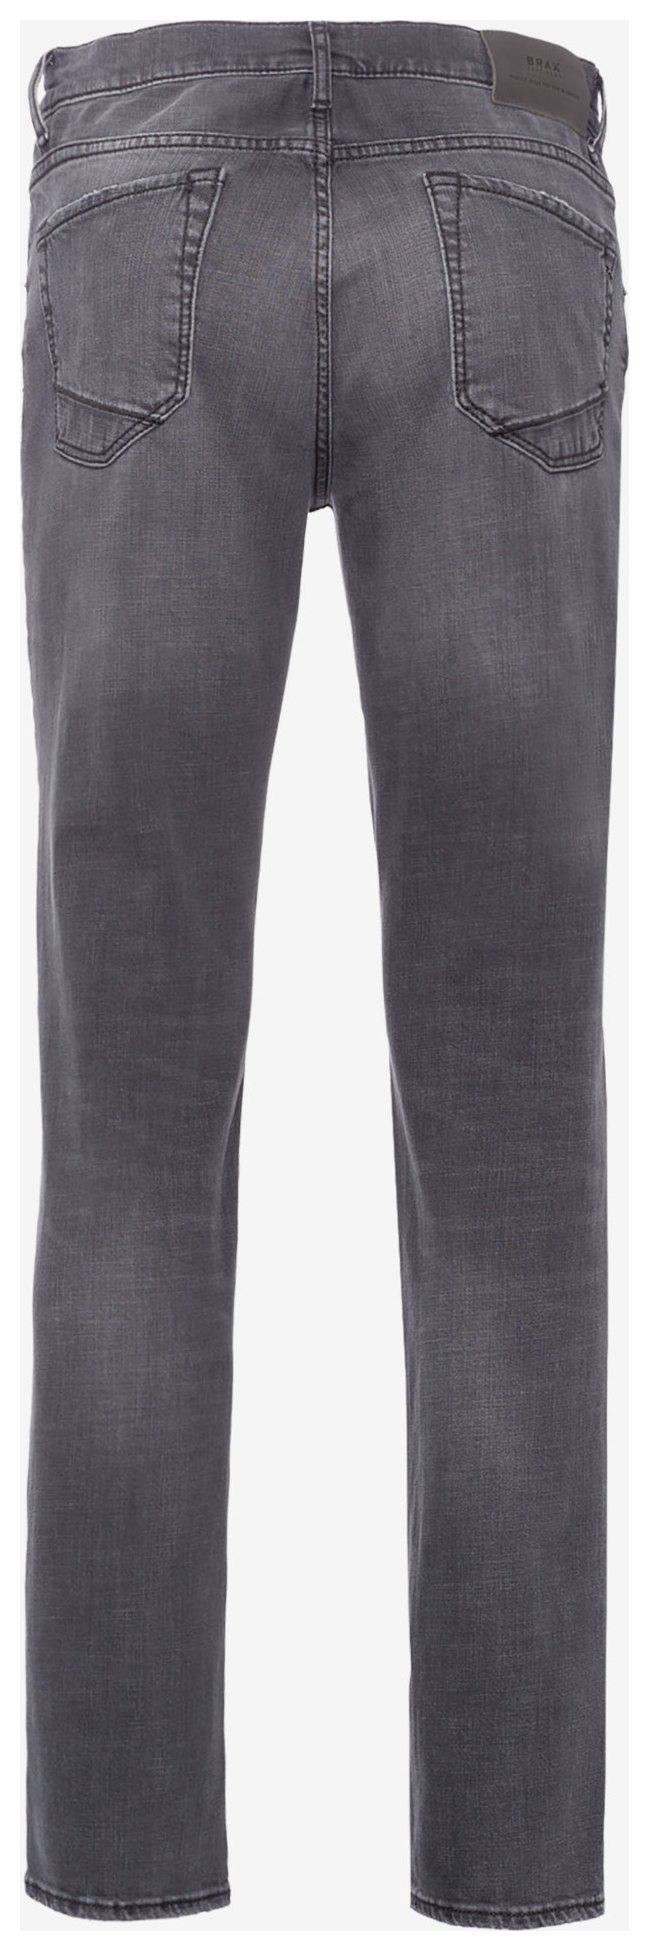 Brax Chuck Jeans Grigio Vintage | Jan Rozing Men's Fashion